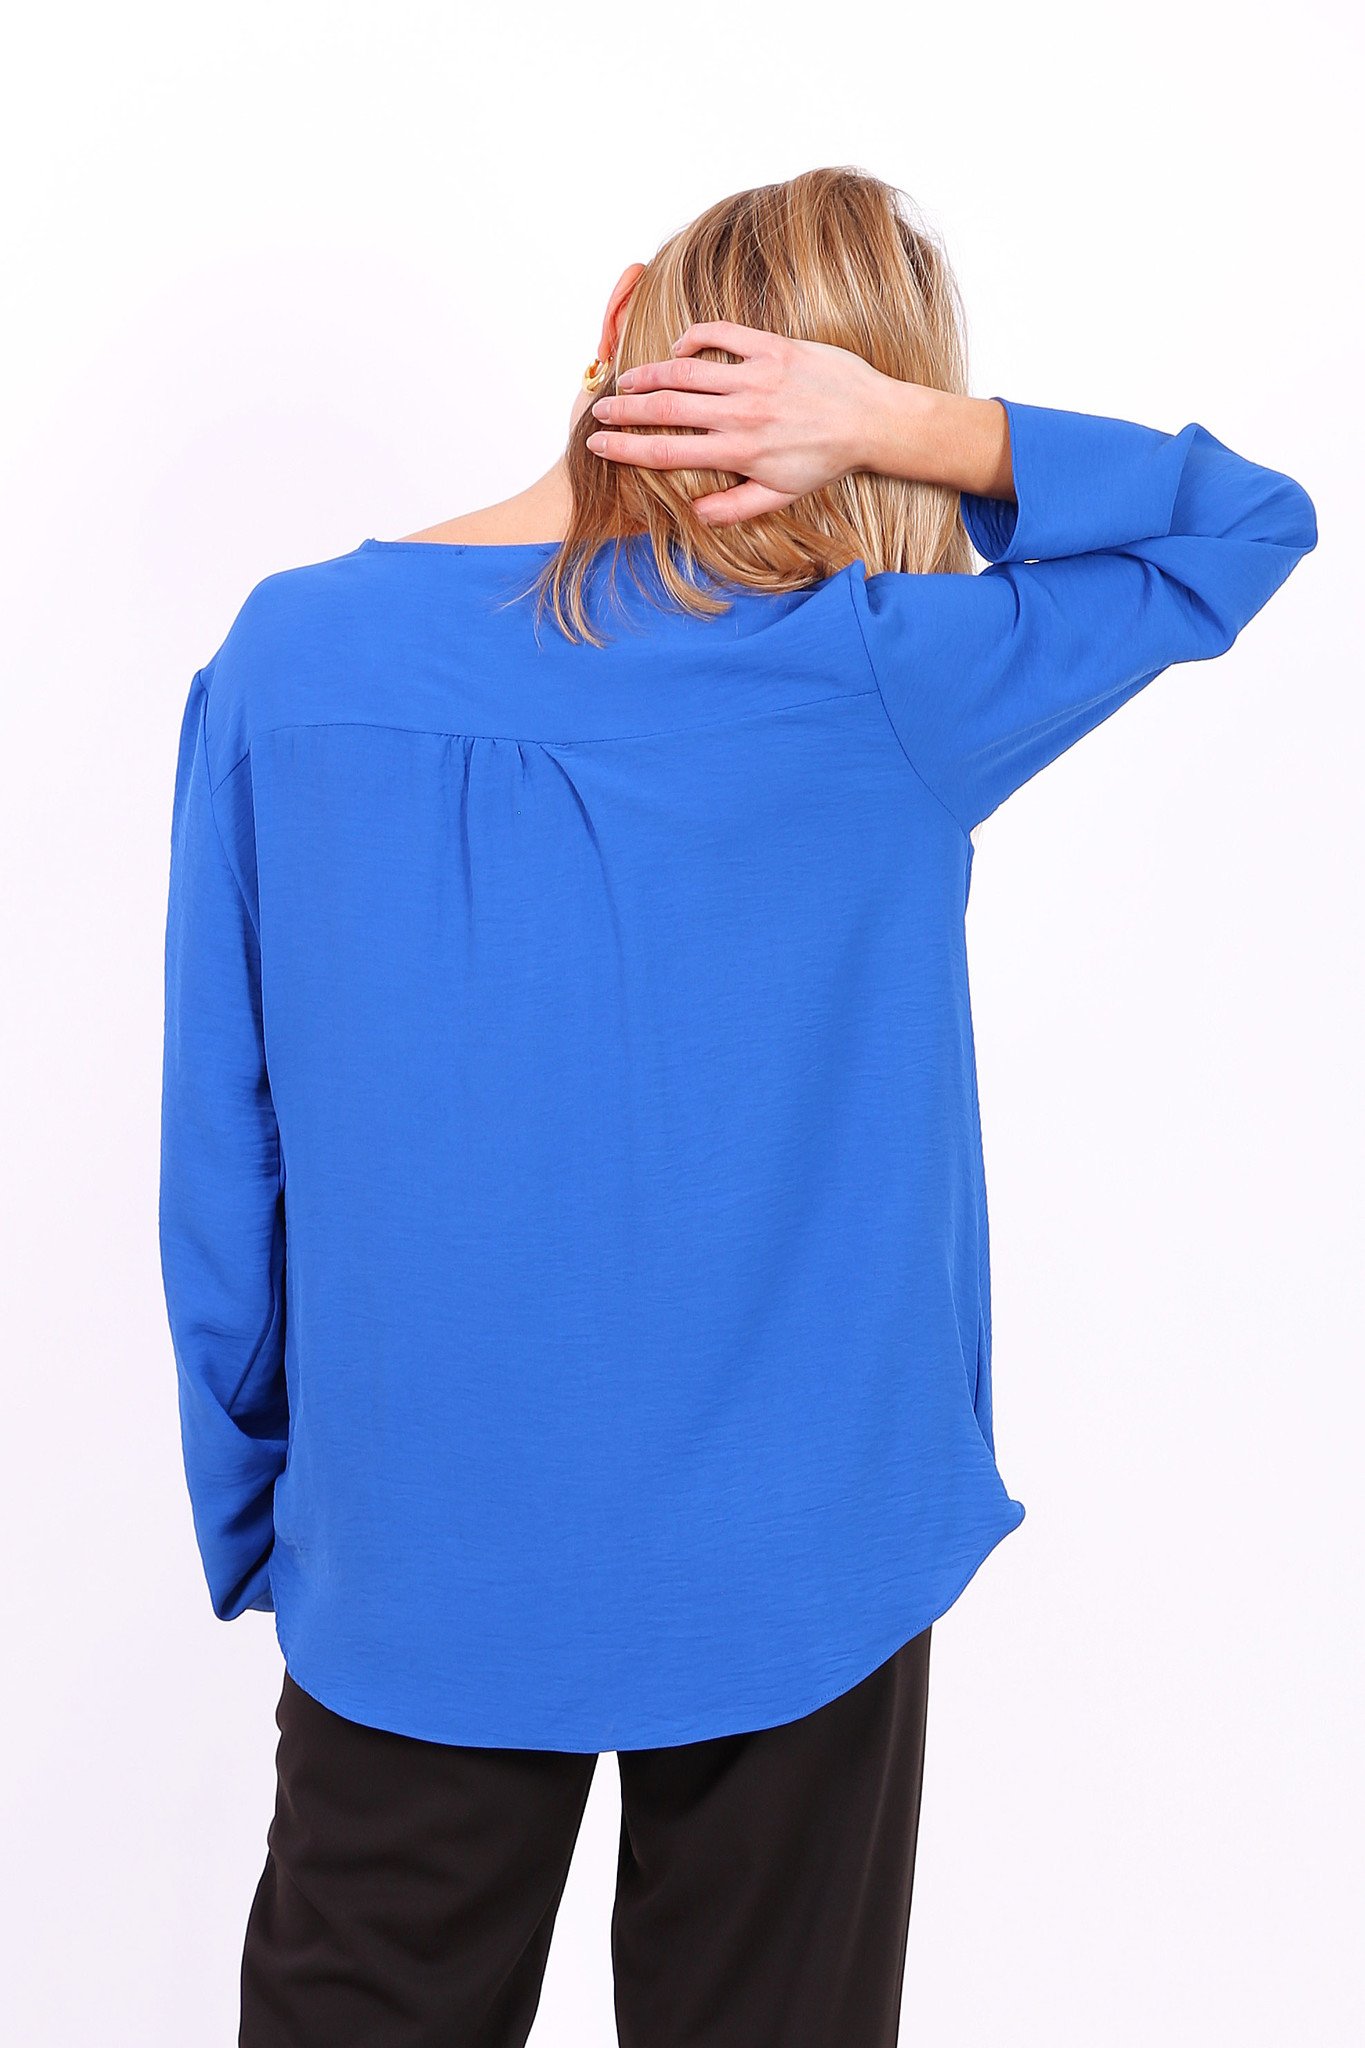 zeemijl Saai Jongleren koningsblauwe overslag blouse - MOOS FASHION